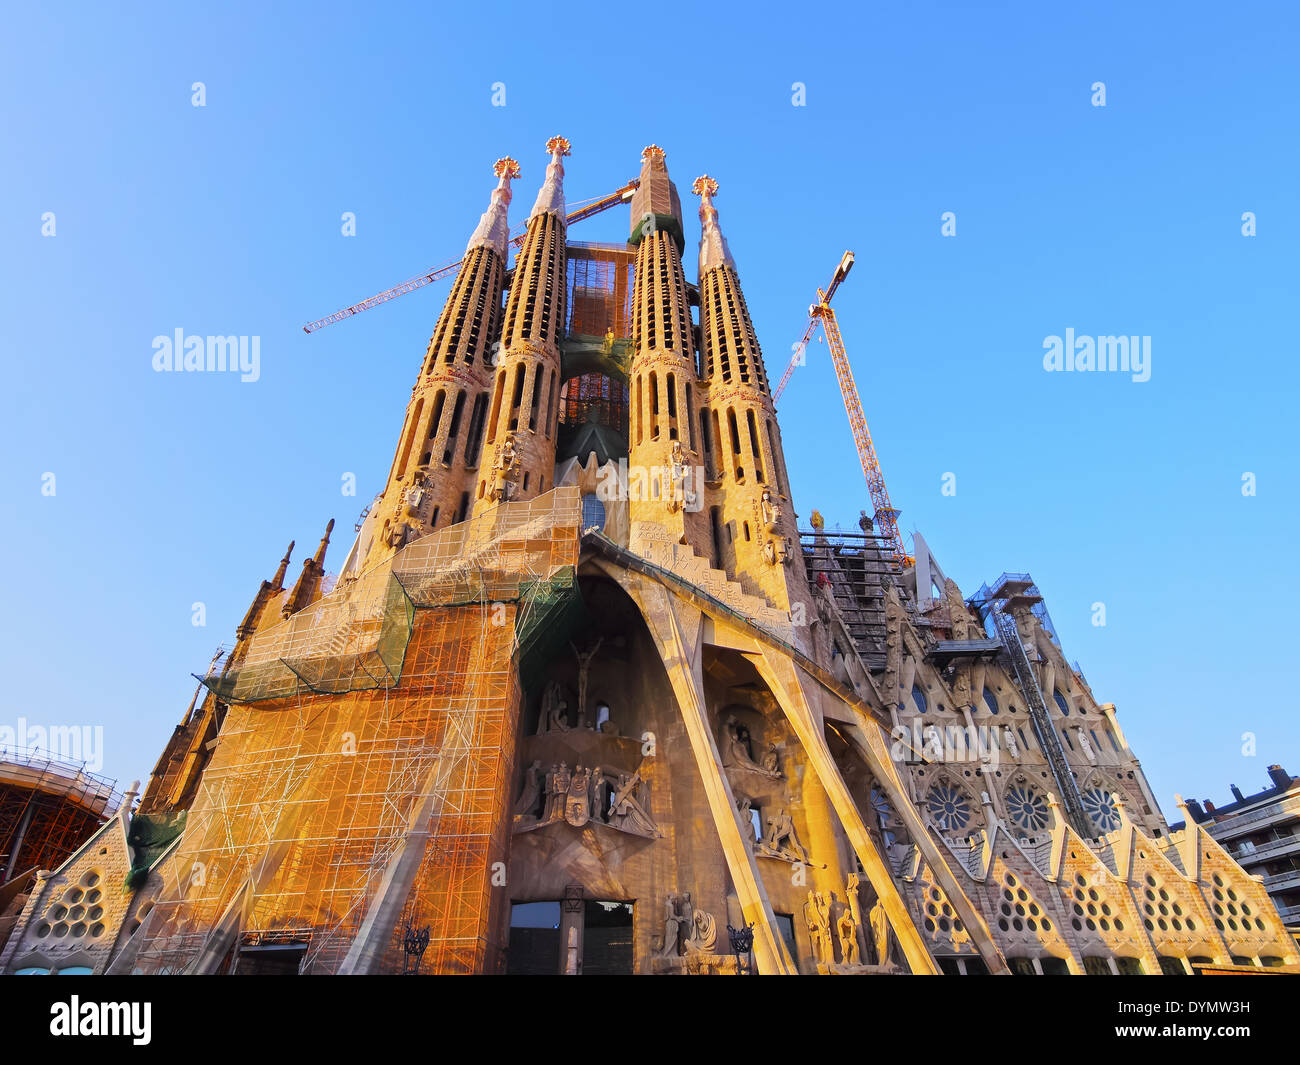 Sagrada Familia - famous church designed by Antoni Gaudi in Barcelona, Catalonia, Spain Stock Photo